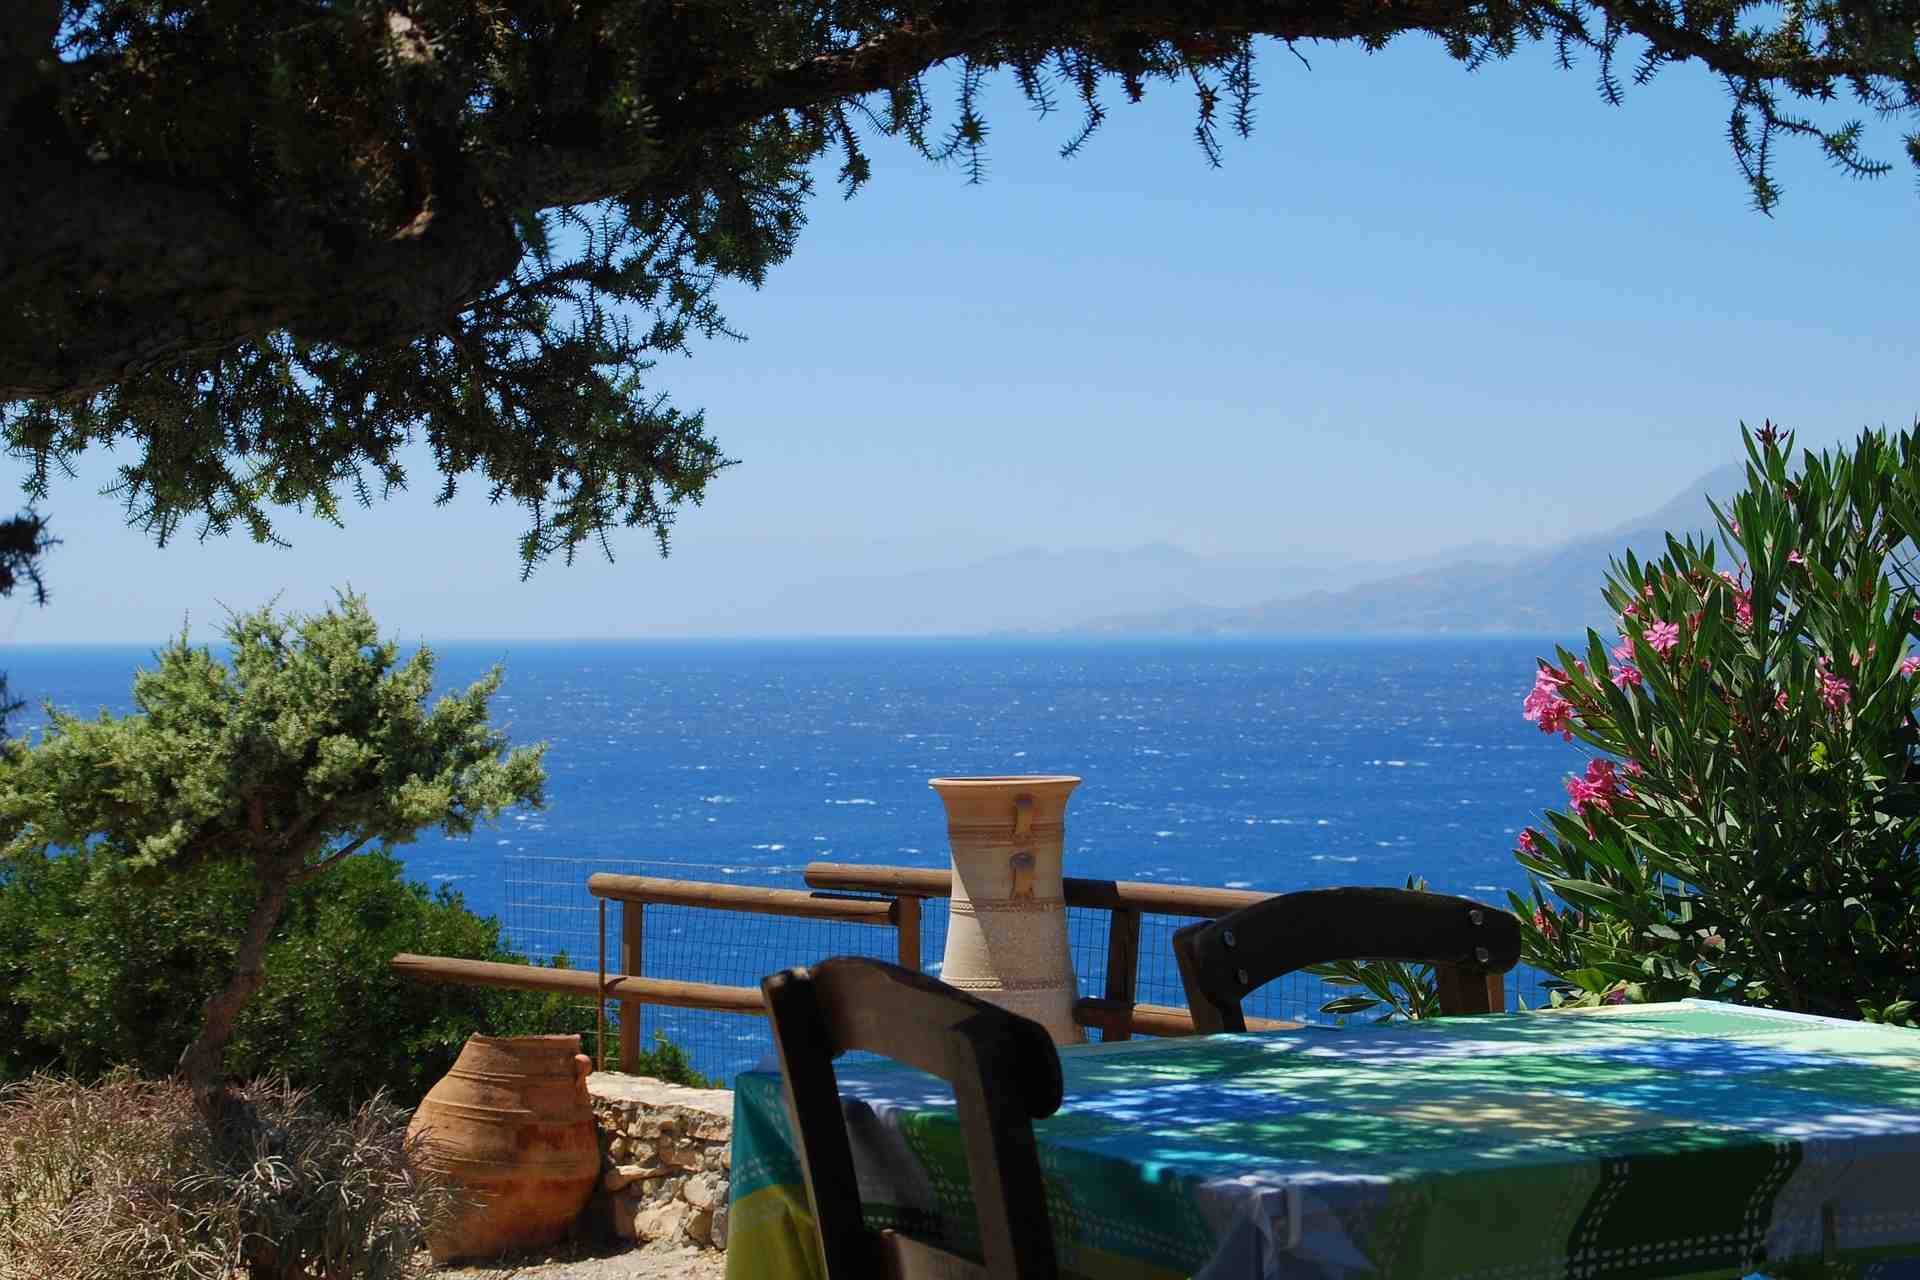 Taverne auf Kreta mit Meerblick